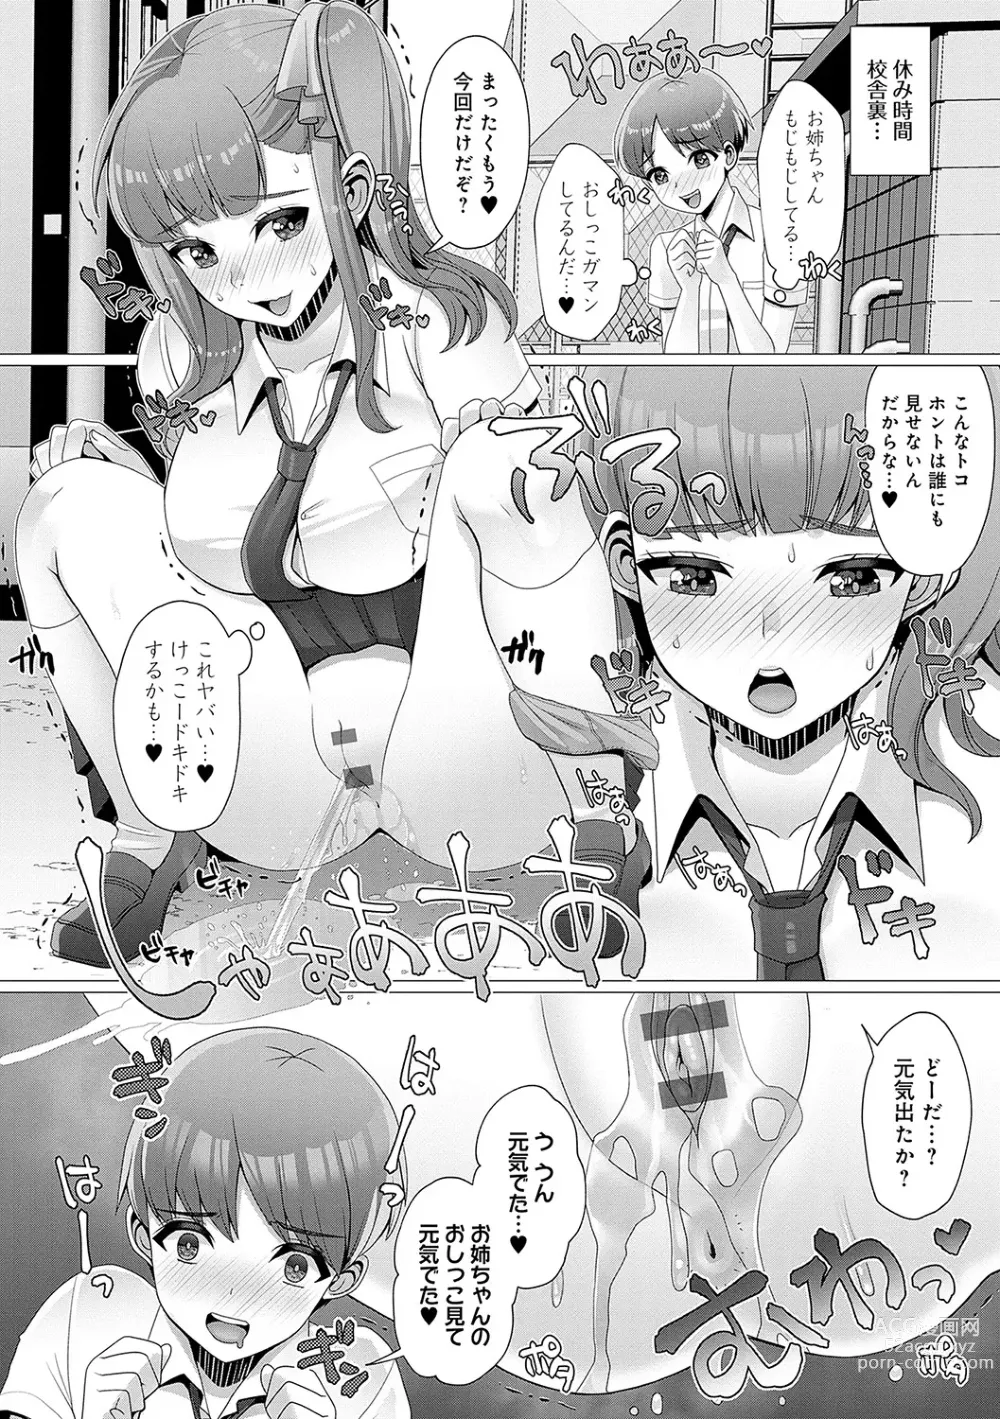 Page 222 of manga Gaman shitemo, dechau.